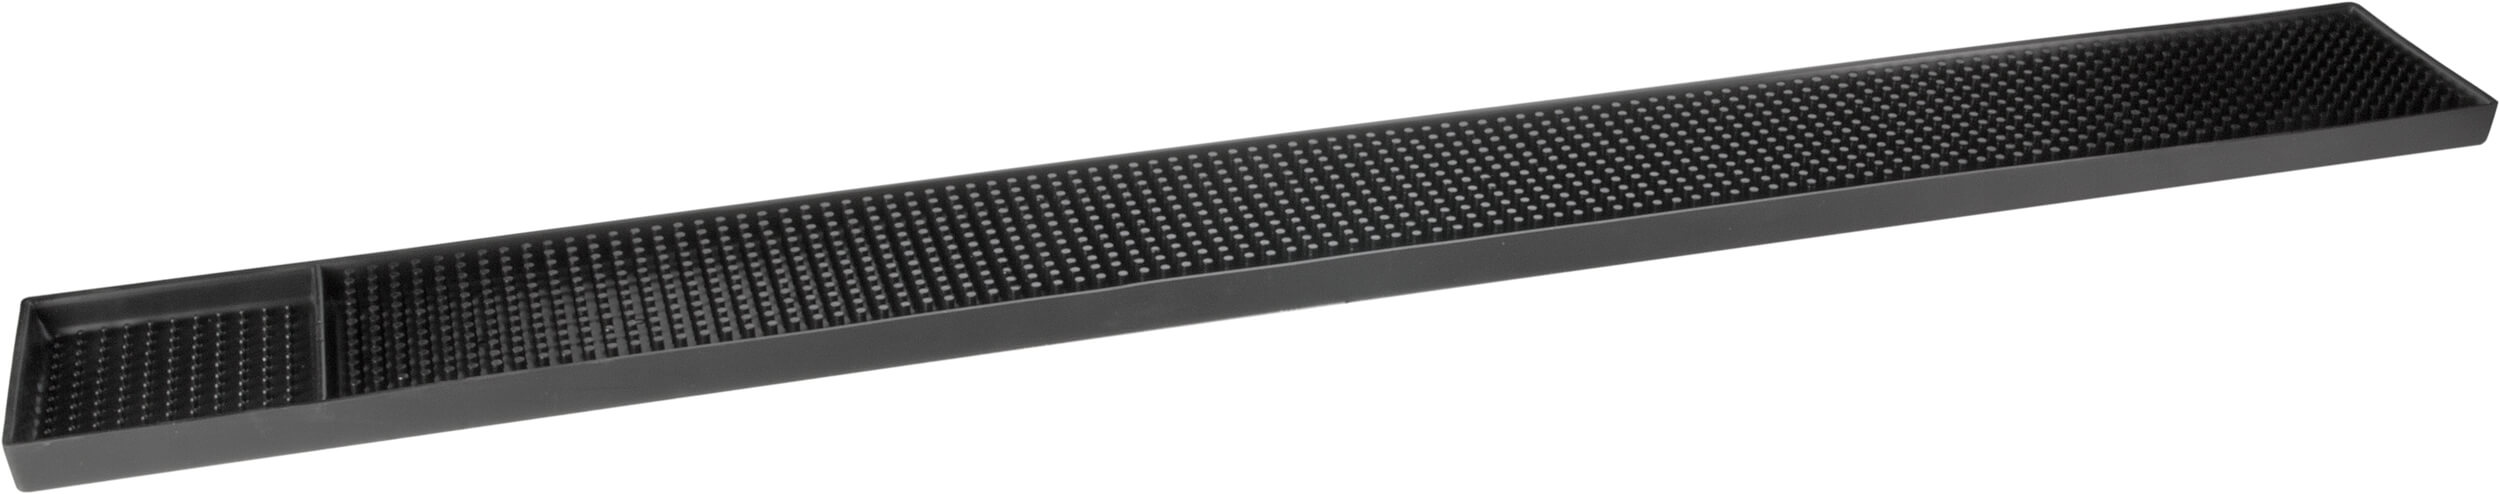 Bar mat X-long (78x9x1,5cm) - black